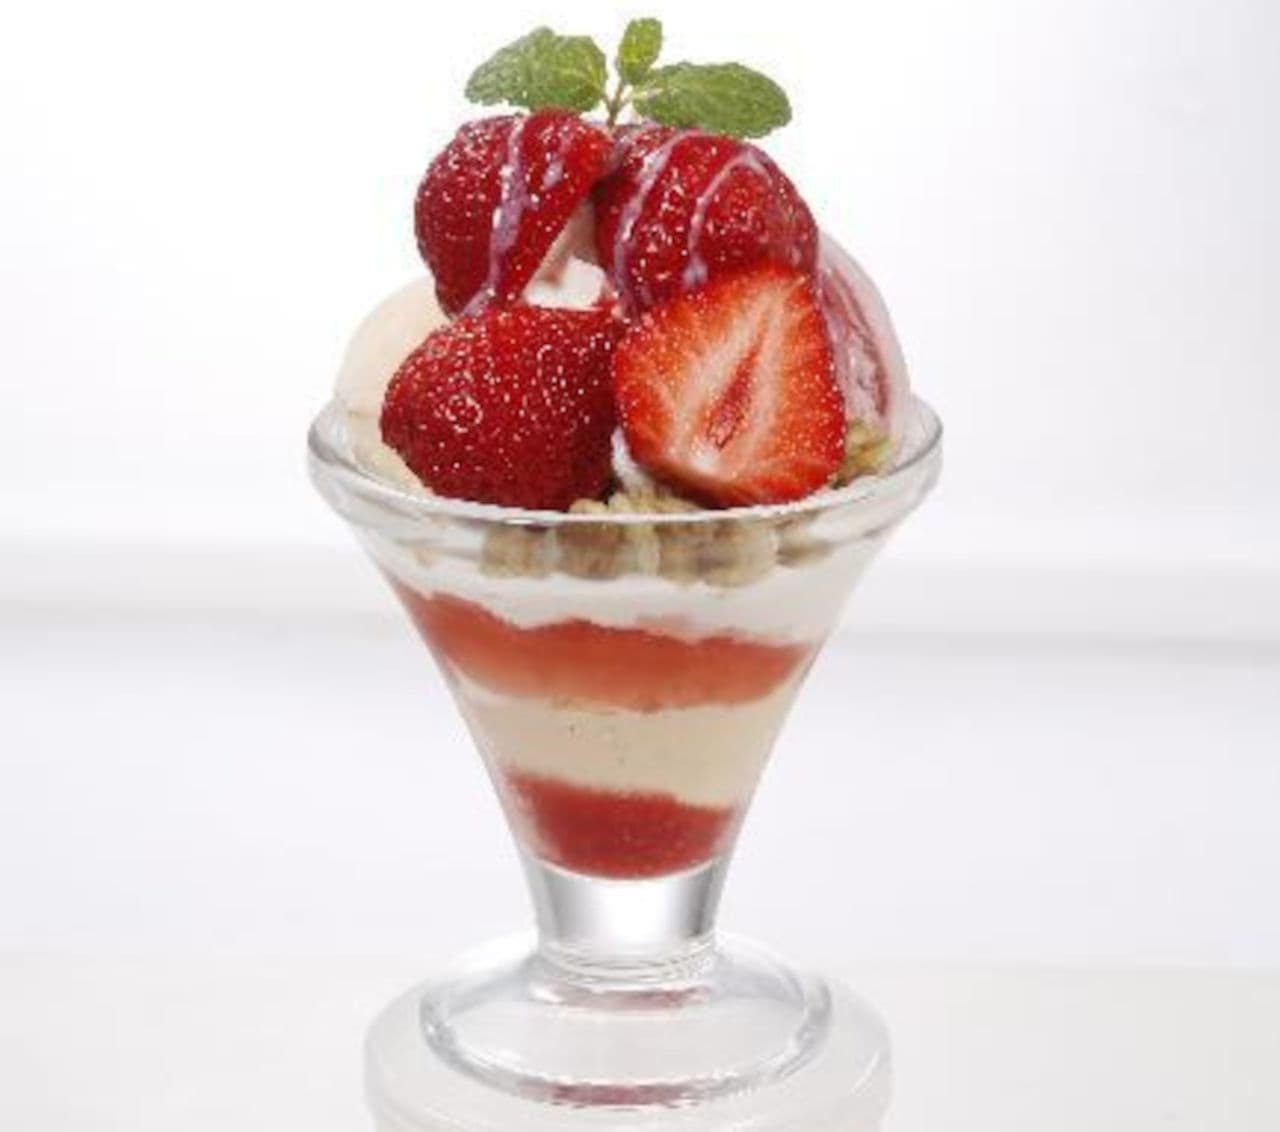 Denny's "Strawberry Dessert"